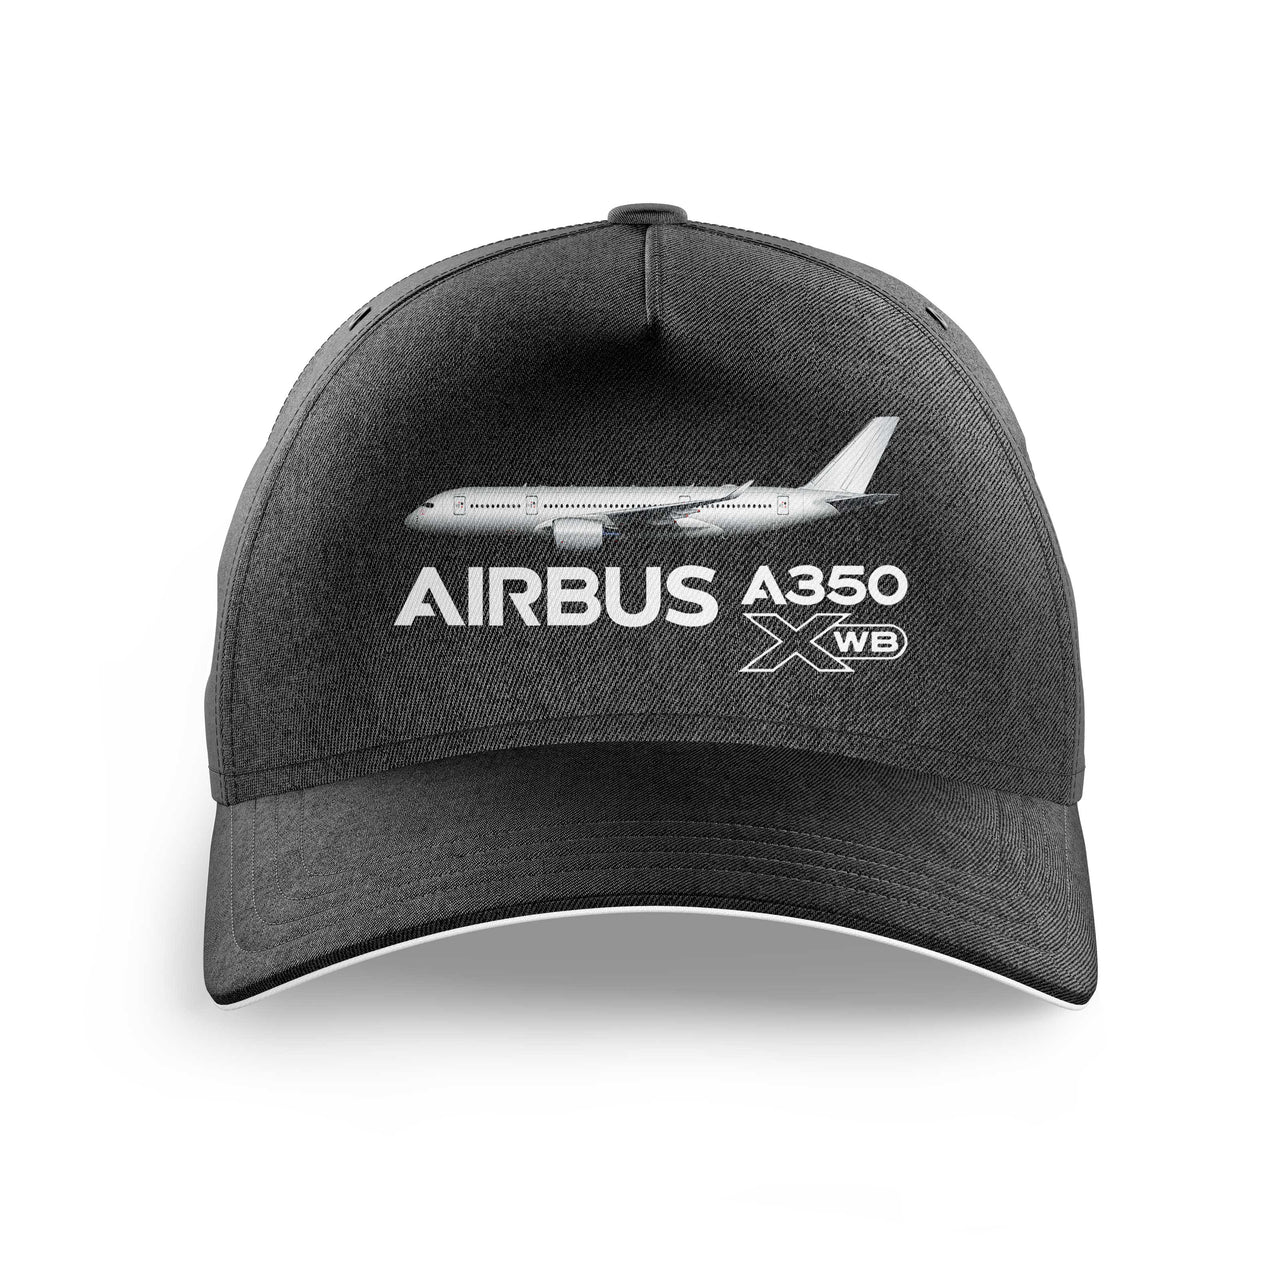 The Airbus A350 XWB Printed Hats